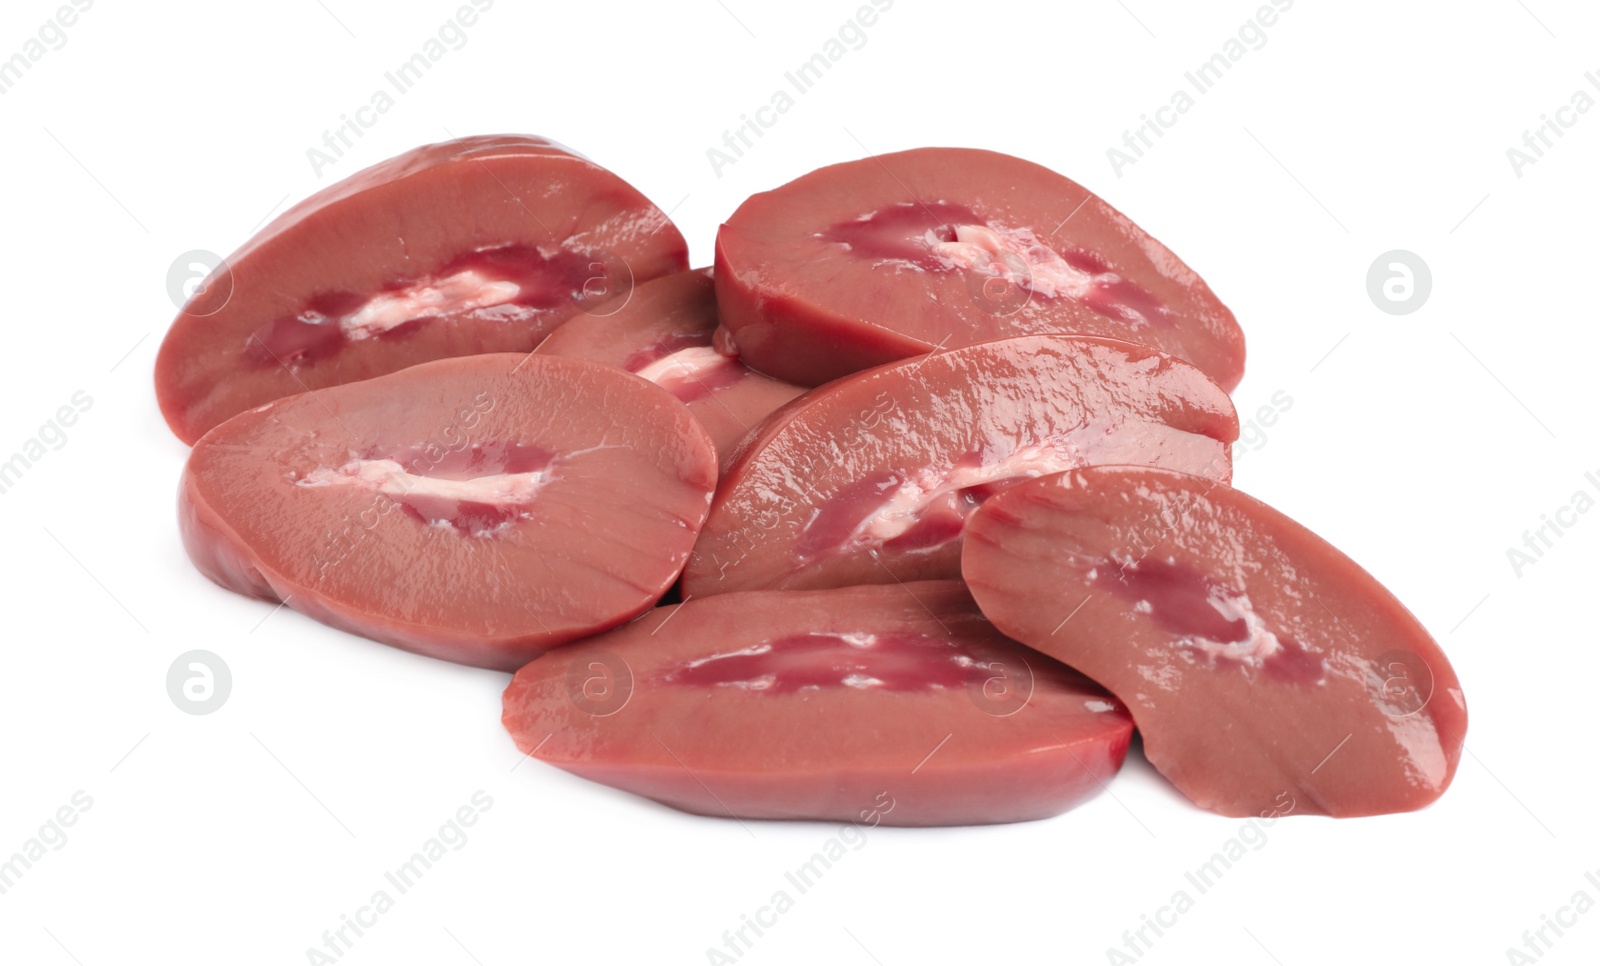 Photo of Cut fresh raw pork kidney on white background